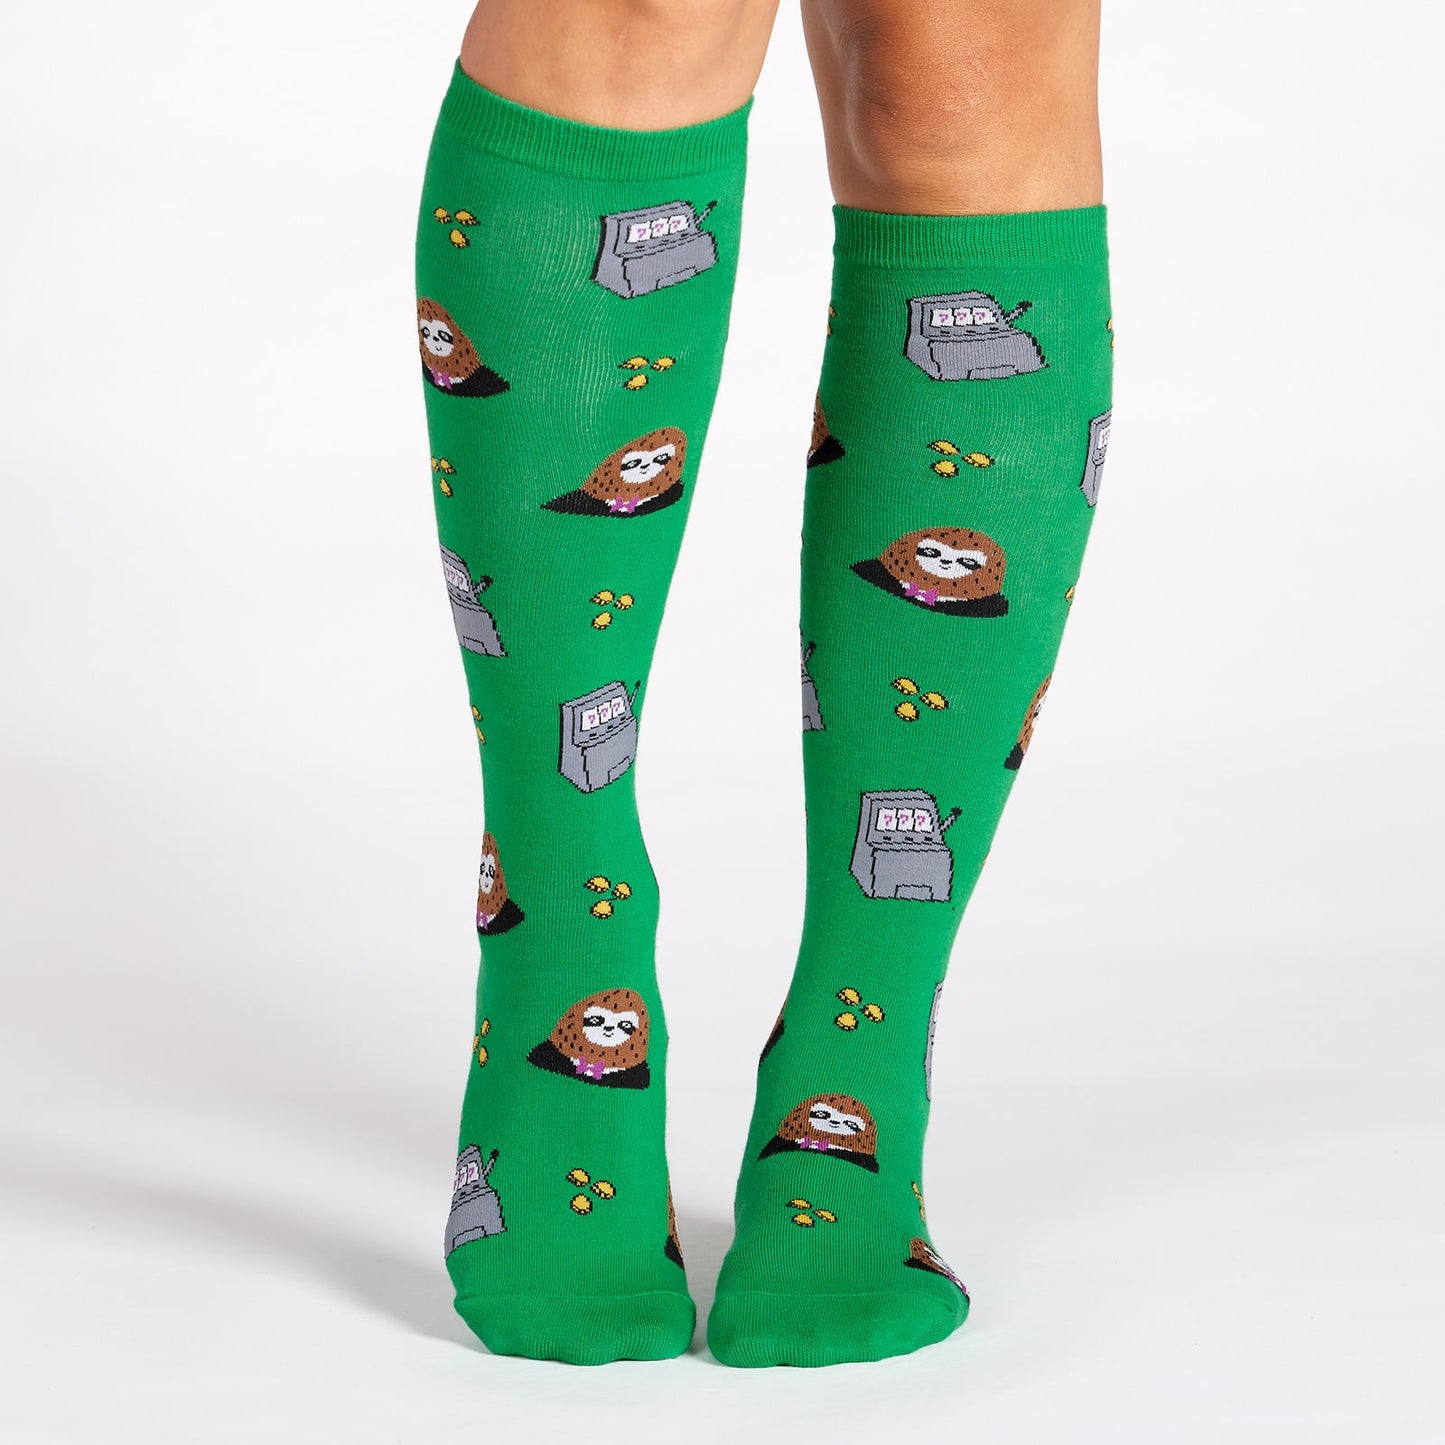 Sock It To Me Women's Knee High Socks - Sloth Machine